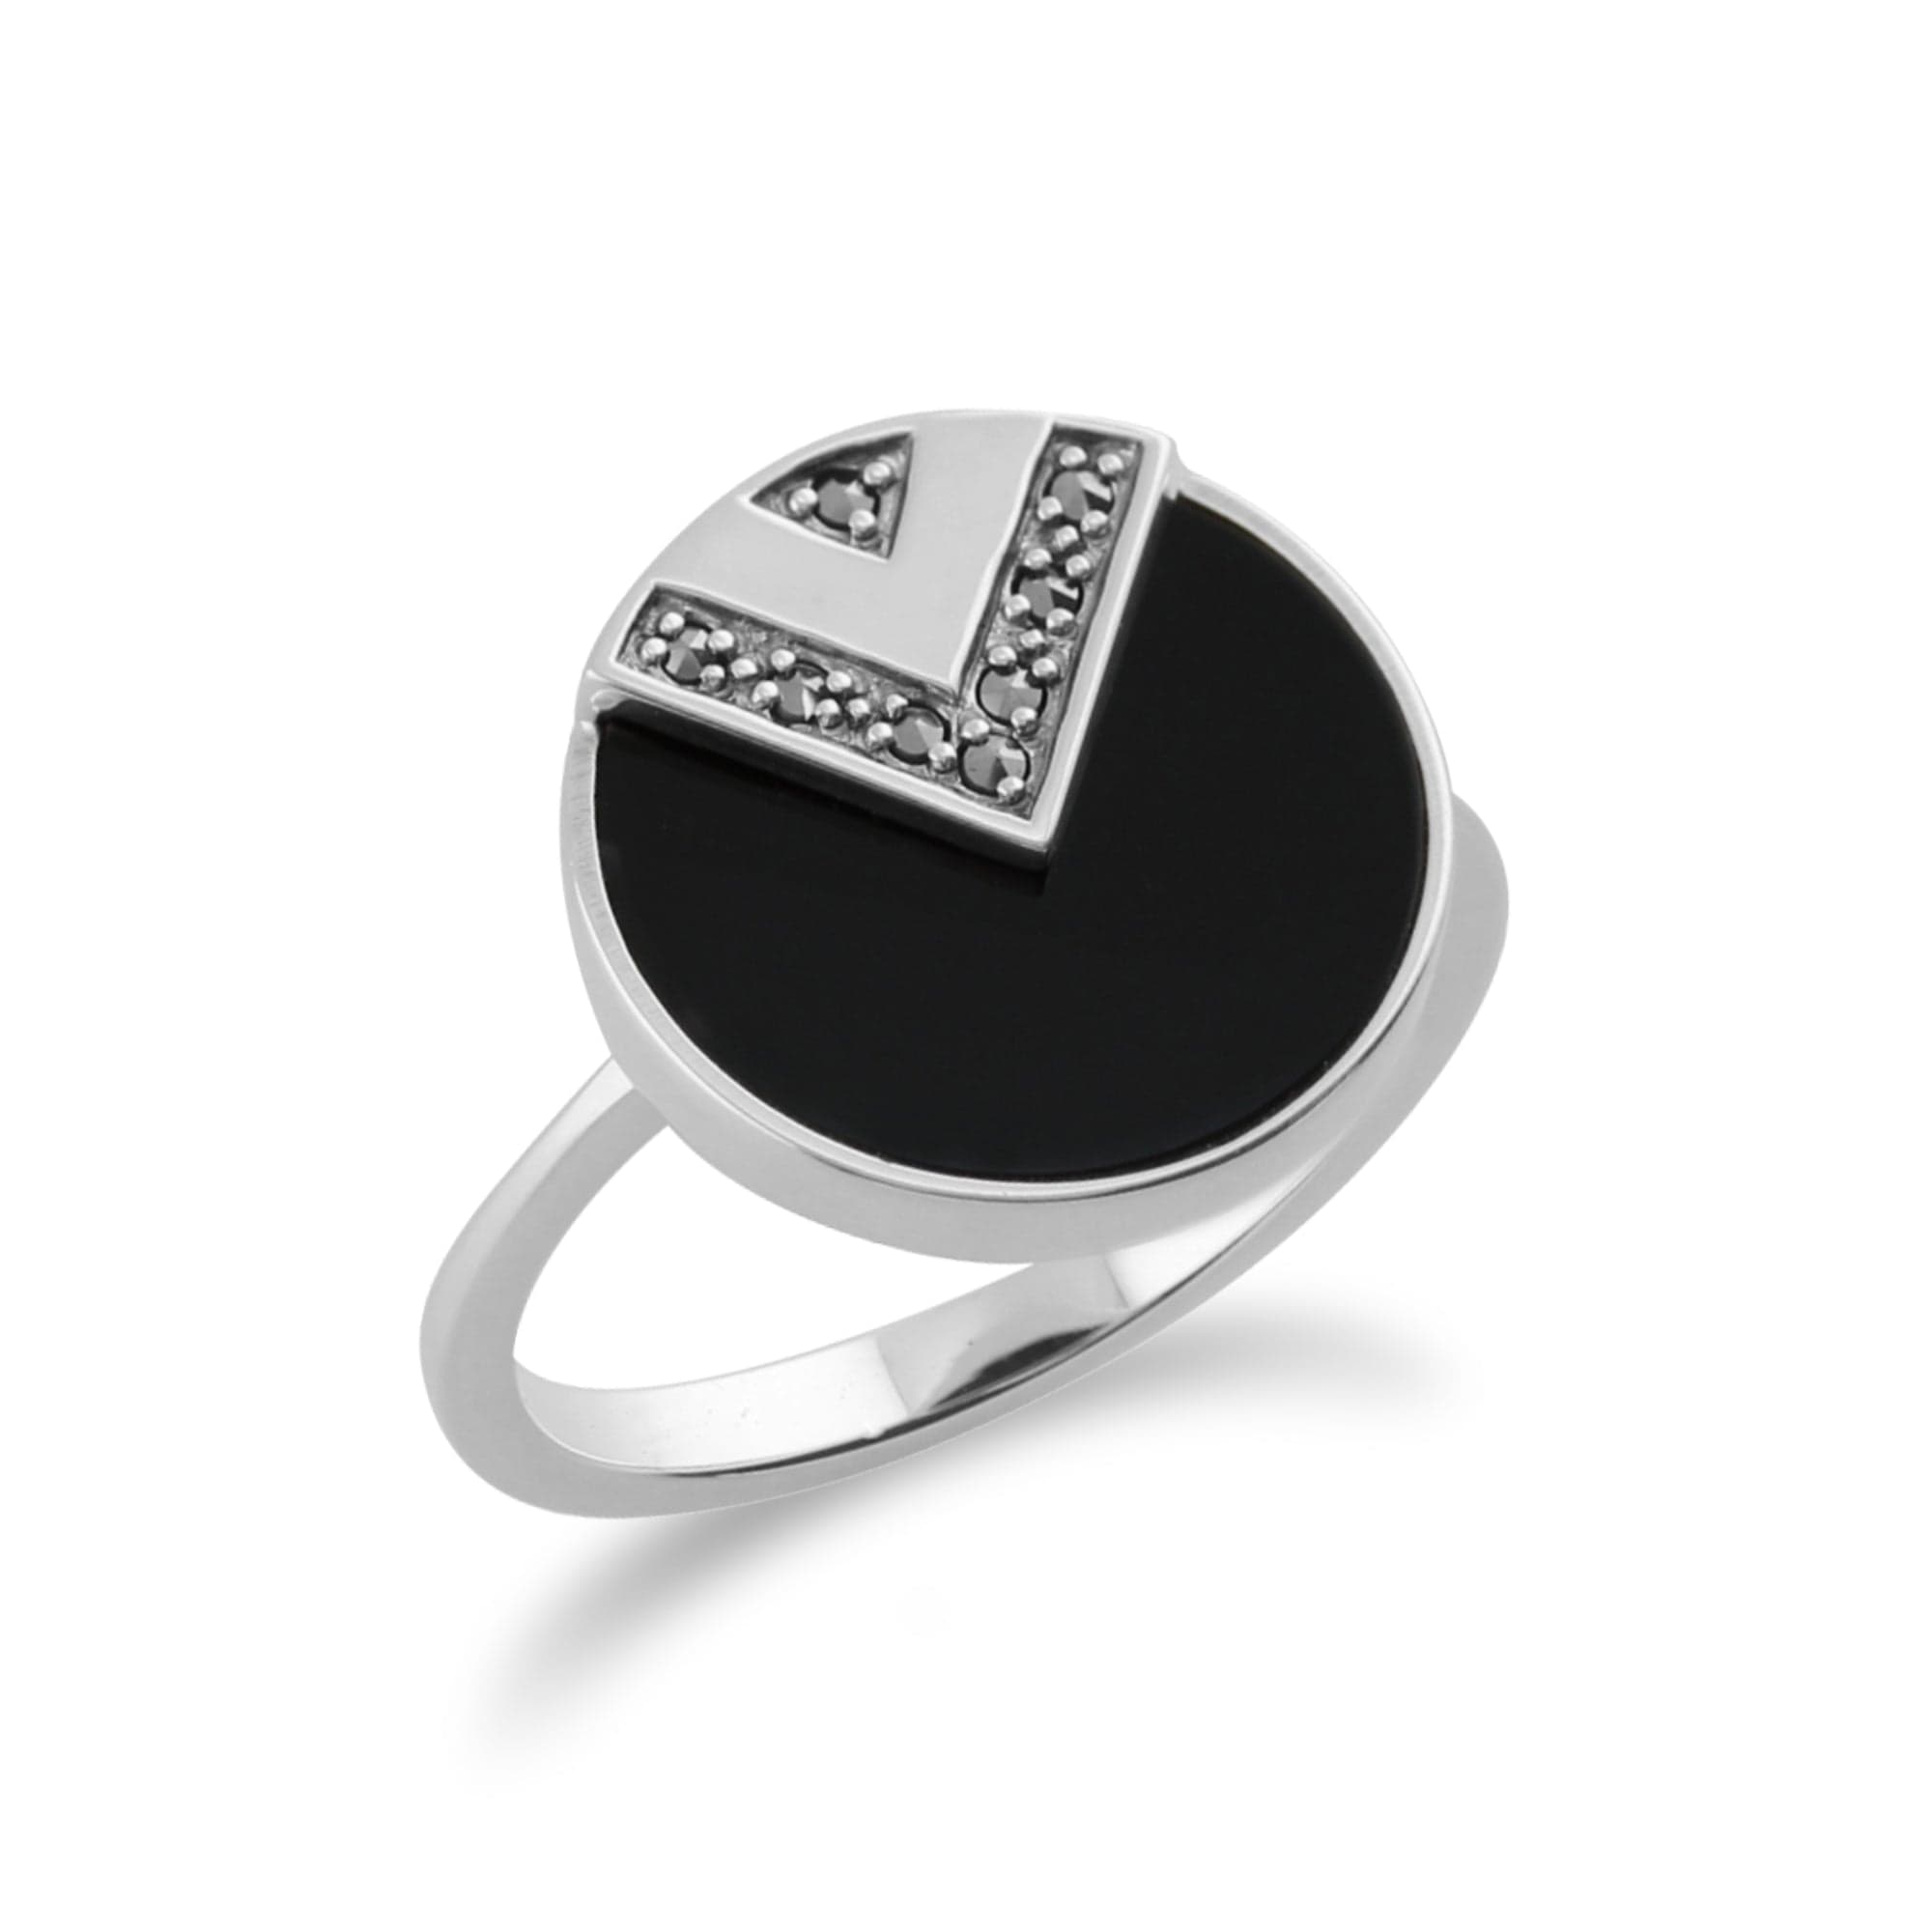 Gemondo 925 Sterling Silver 3ct Black Onyx & Marcasite Art Deco Ring Image 2